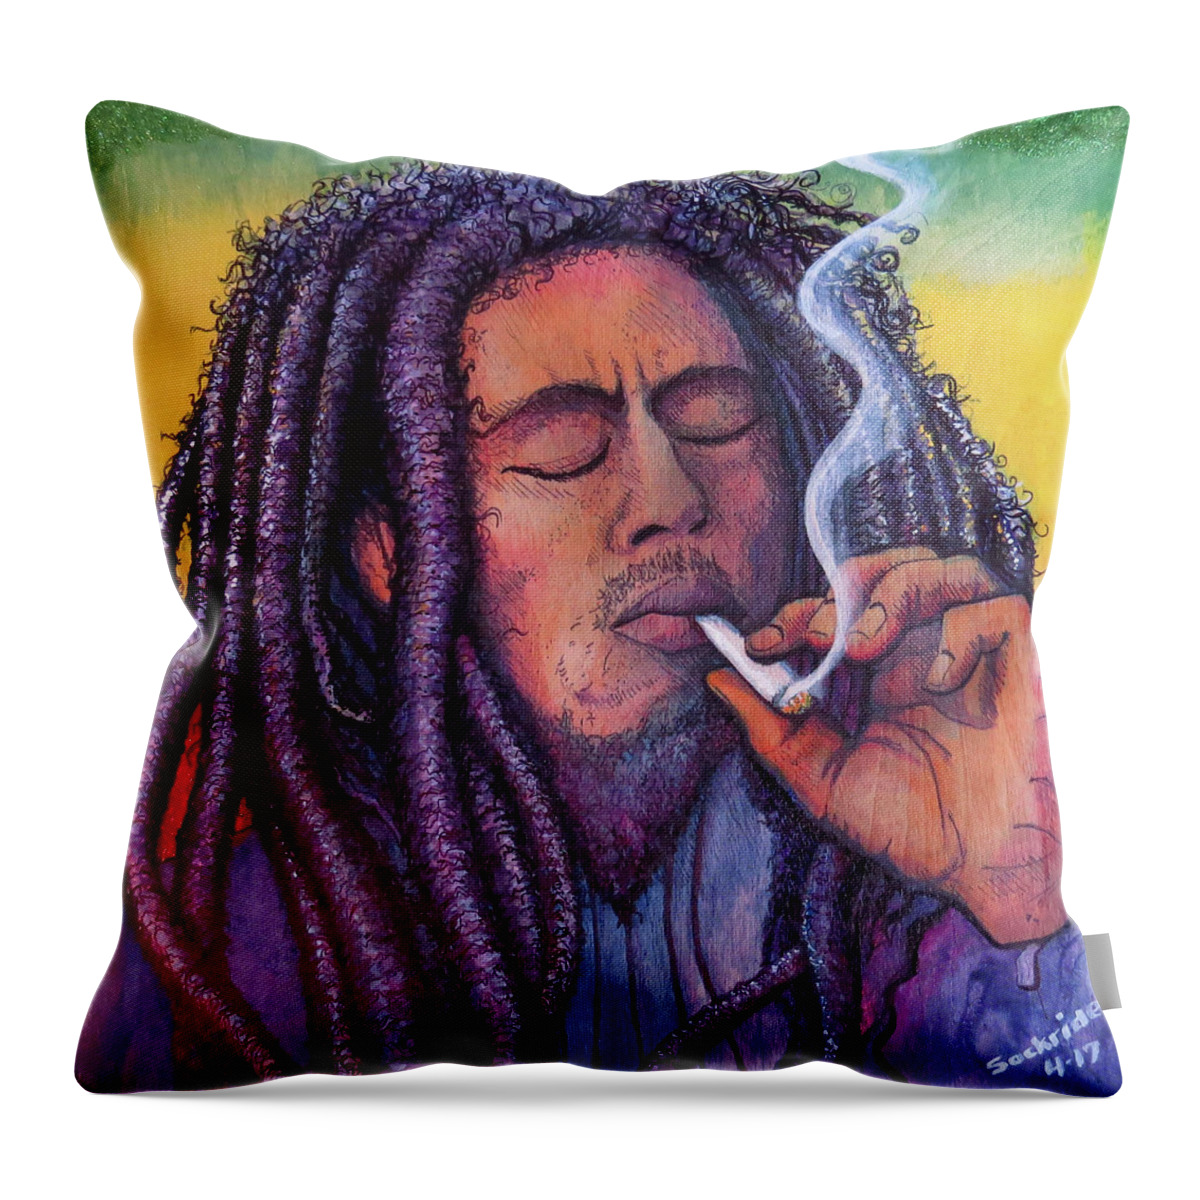 Bob Marley Throw Pillow featuring the painting Marley Smoking by David Sockrider